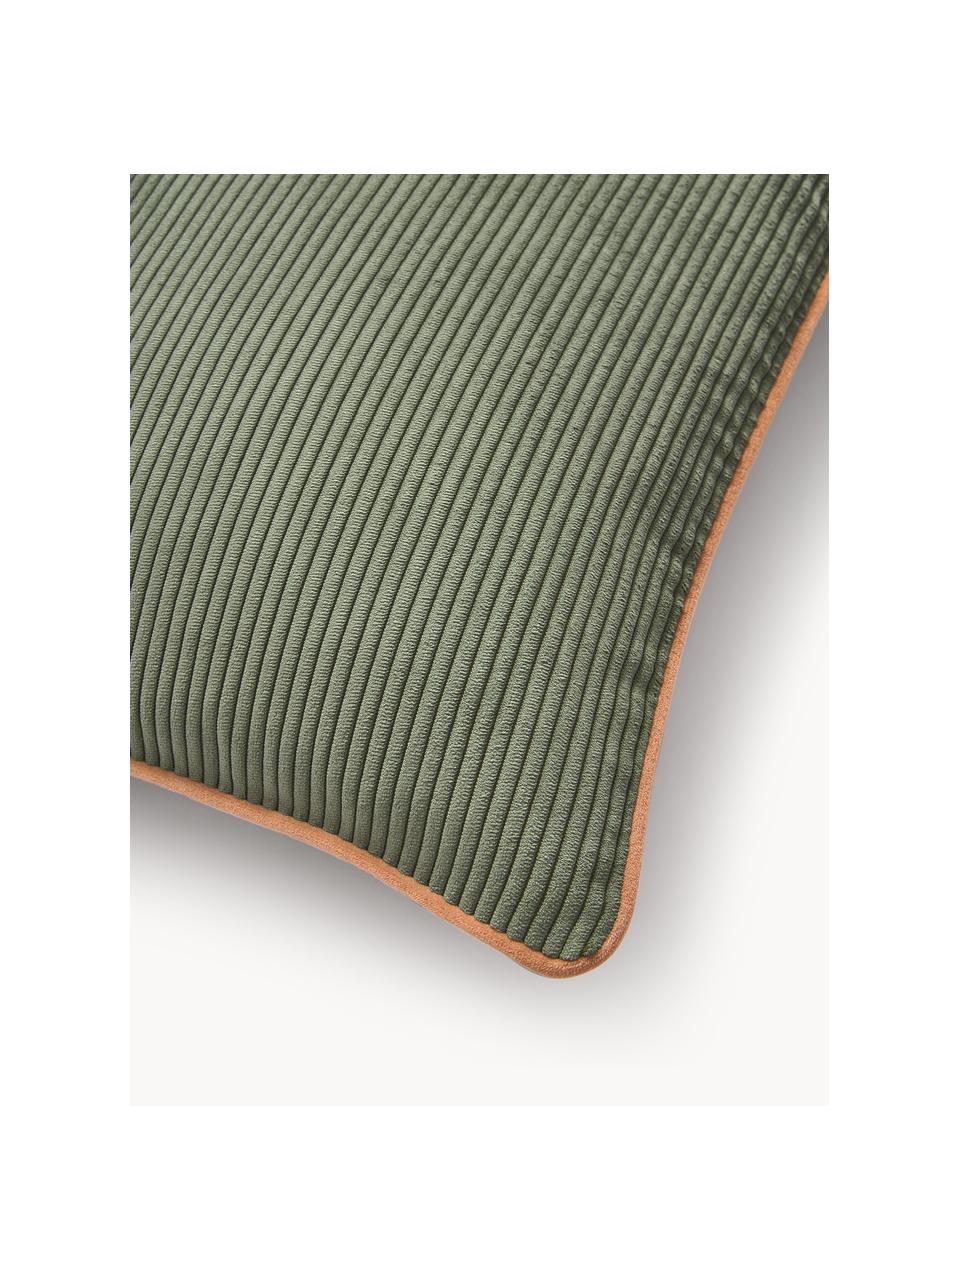 Gewebte Samt-Kissenhüllen Carter mit strukturierter Oberfläche, 2 Stück, 88 % Polyester, 12 % Nylon, Olivgrün, Orange, B 45 x L 45 cm